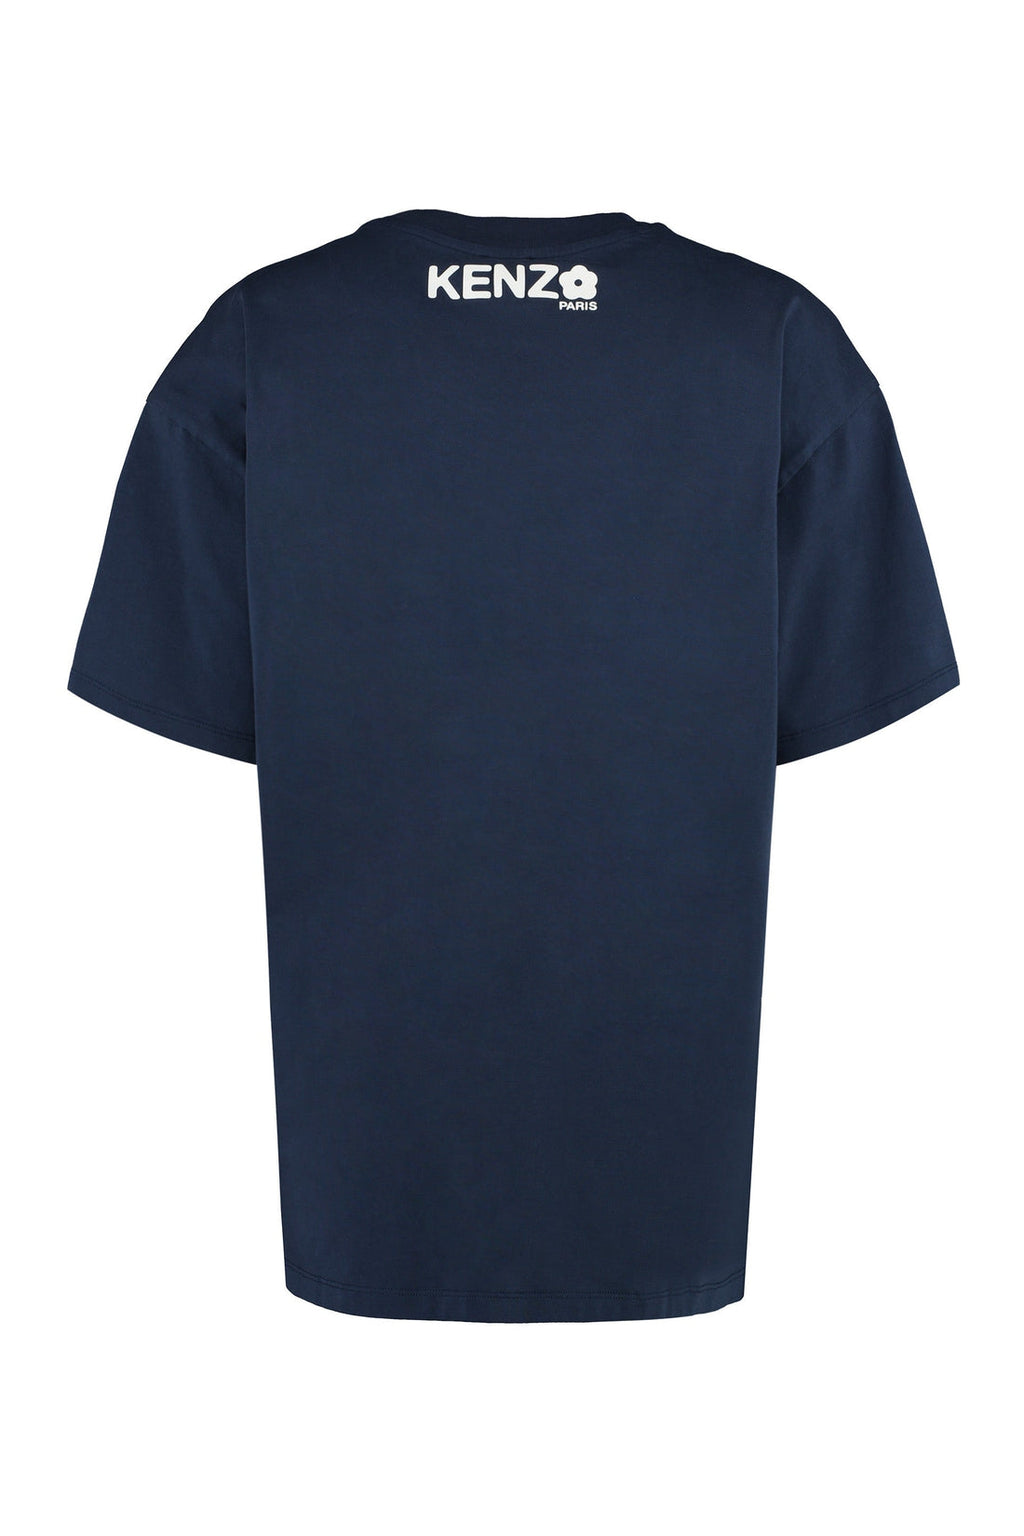 Kenzo-OUTLET-SALE-Printed cotton T-shirt-ARCHIVIST